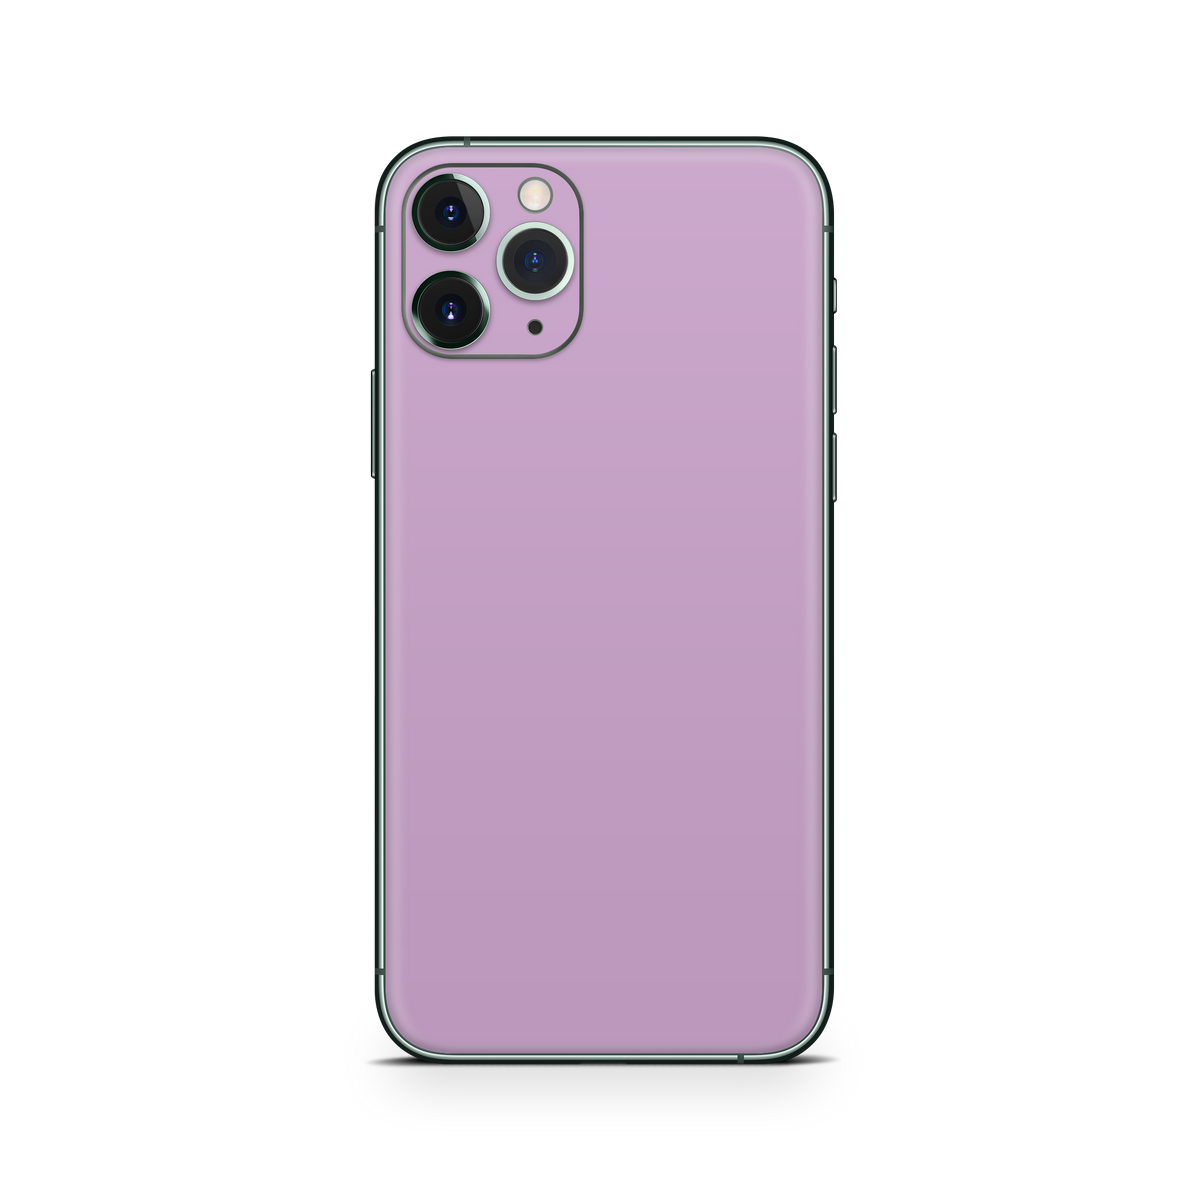 Apple iPhone 11 Pro Soft Lilac Skin